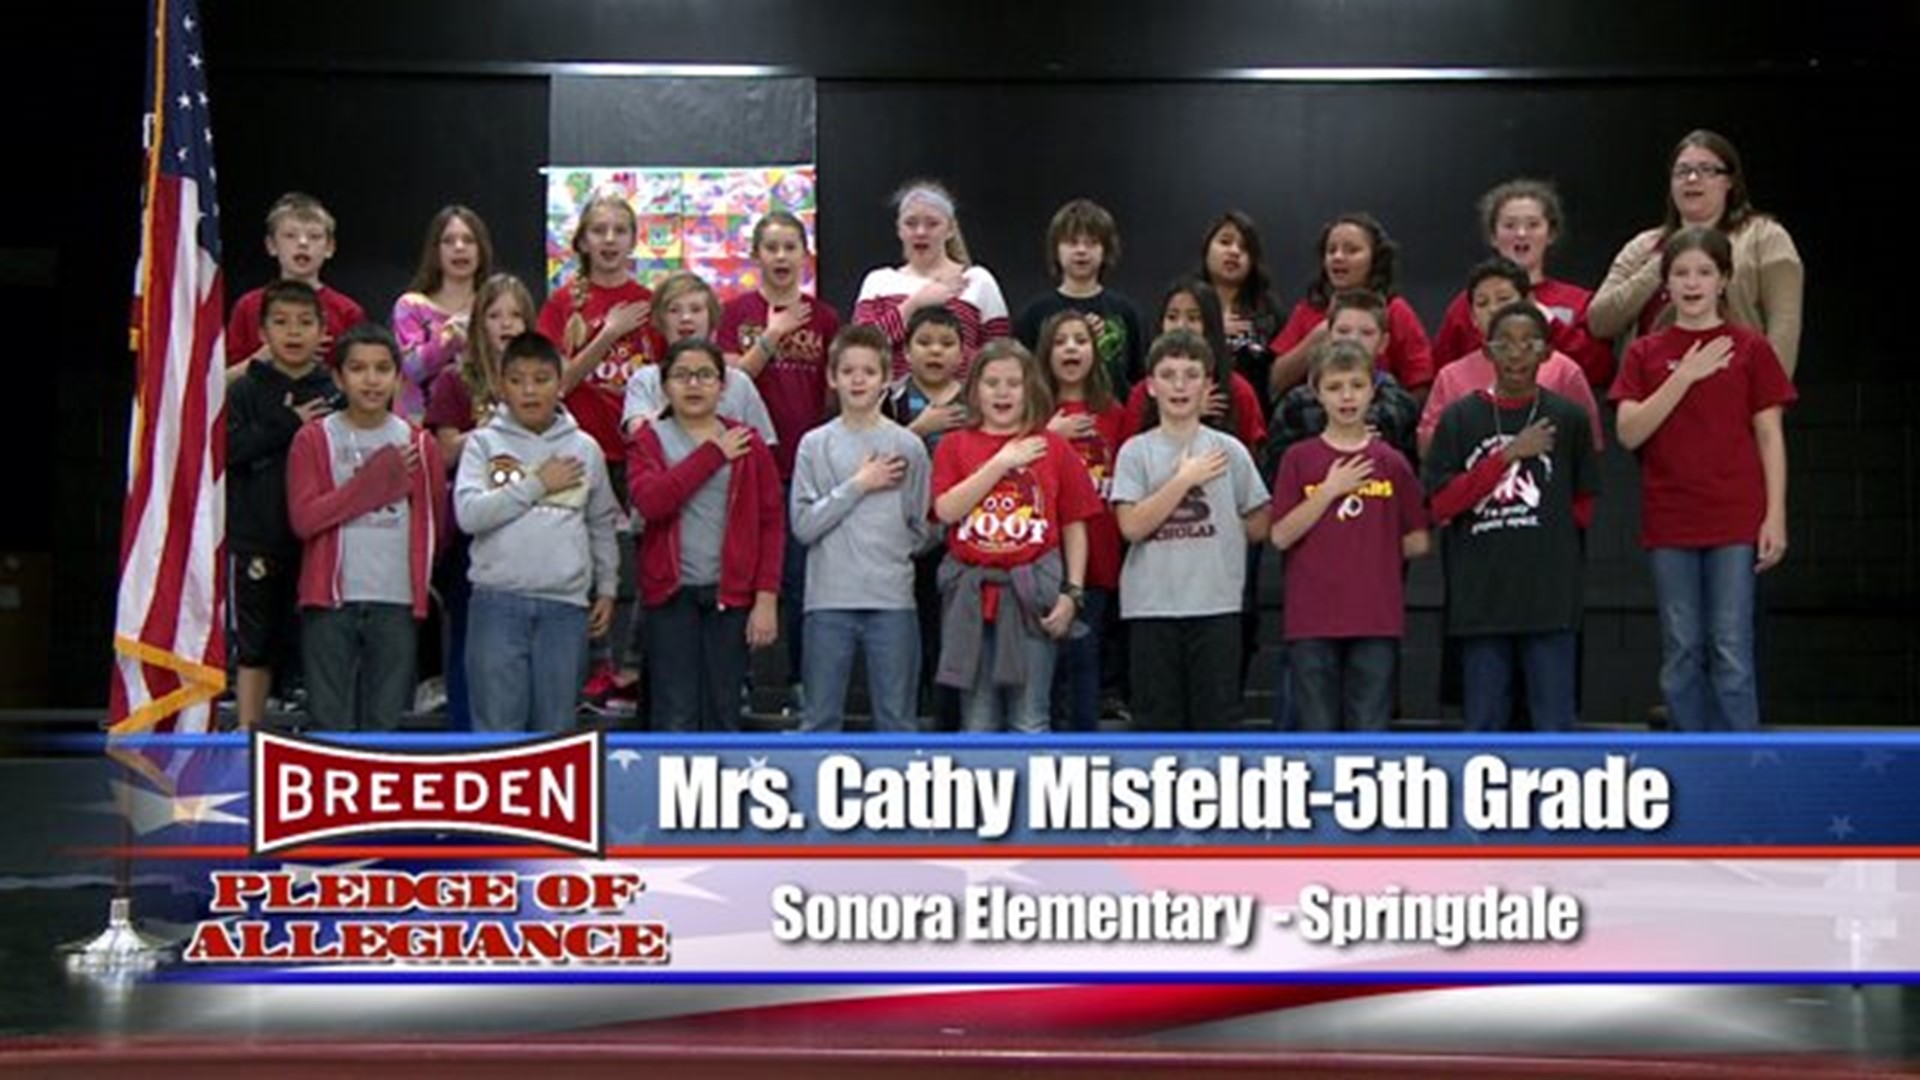 Sonora Elementary, Springdale - Mrs. Cathy Misfeldt - 5th Grade